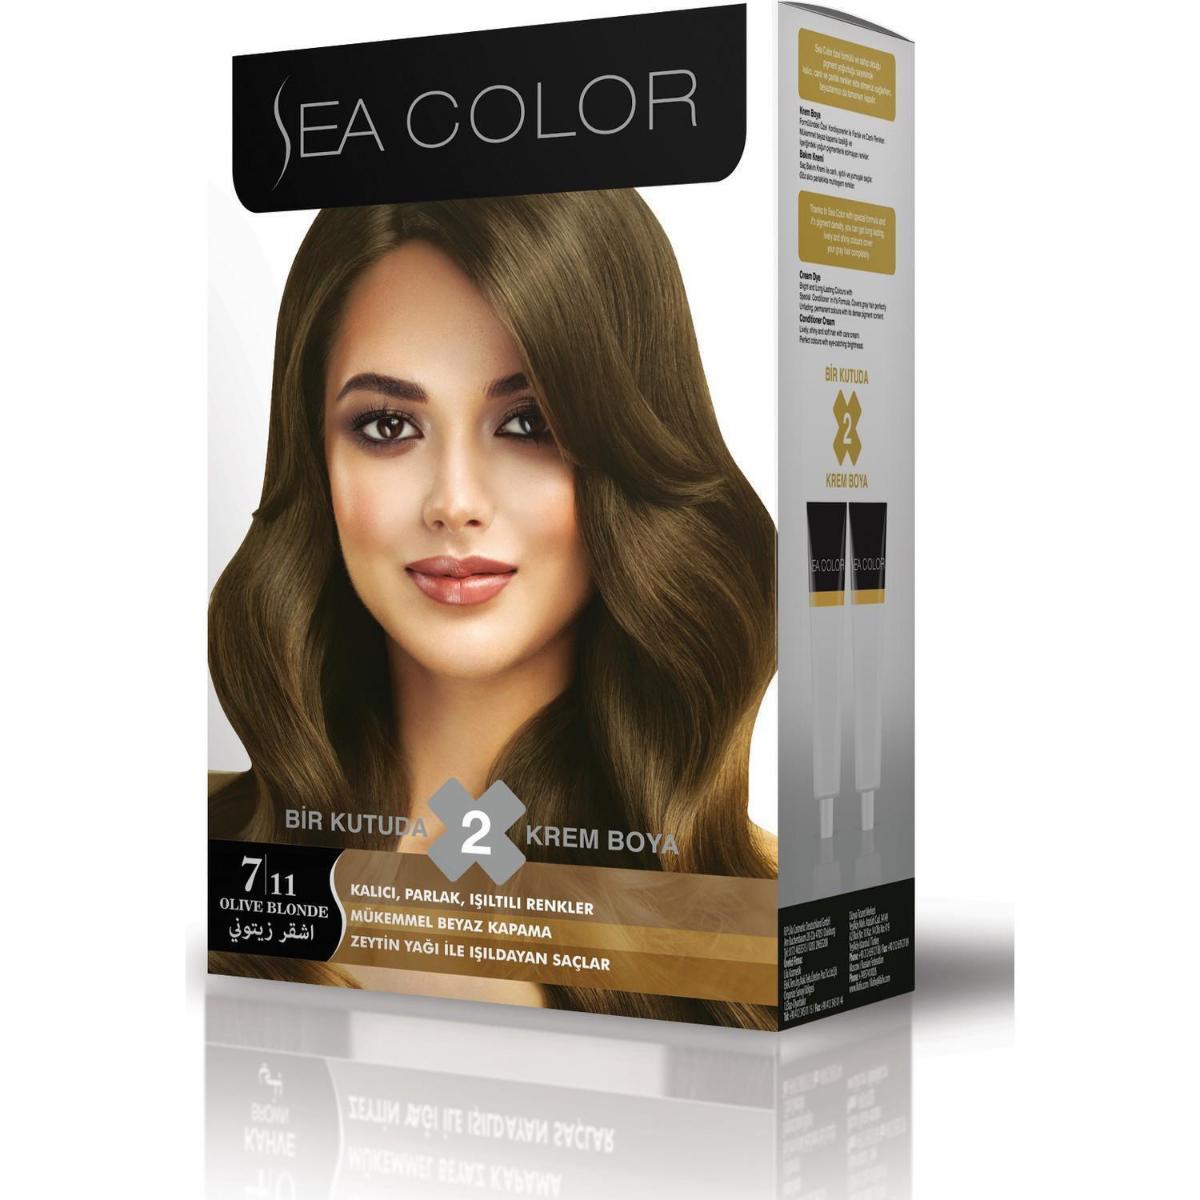 Sea Color 7.11 Olive Blonde Krem Saç Boyası